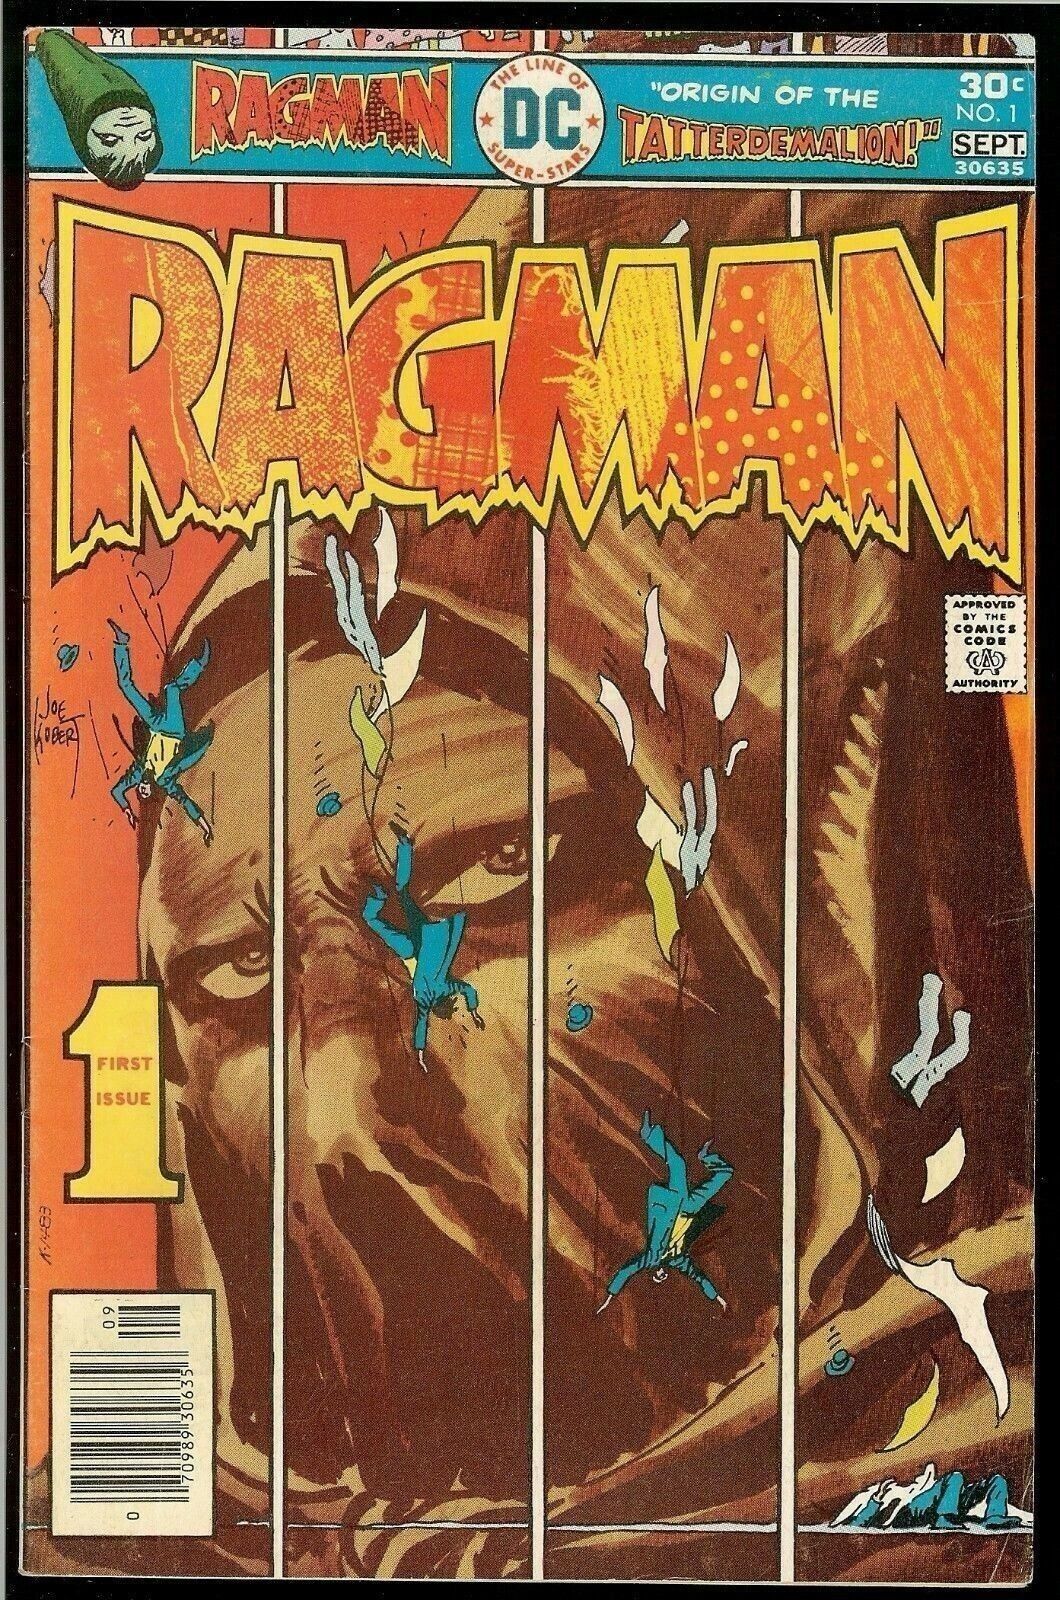 RAGMAN #1 (1976) ORIGIN & 1st APPEARANCE OF RAGMAN